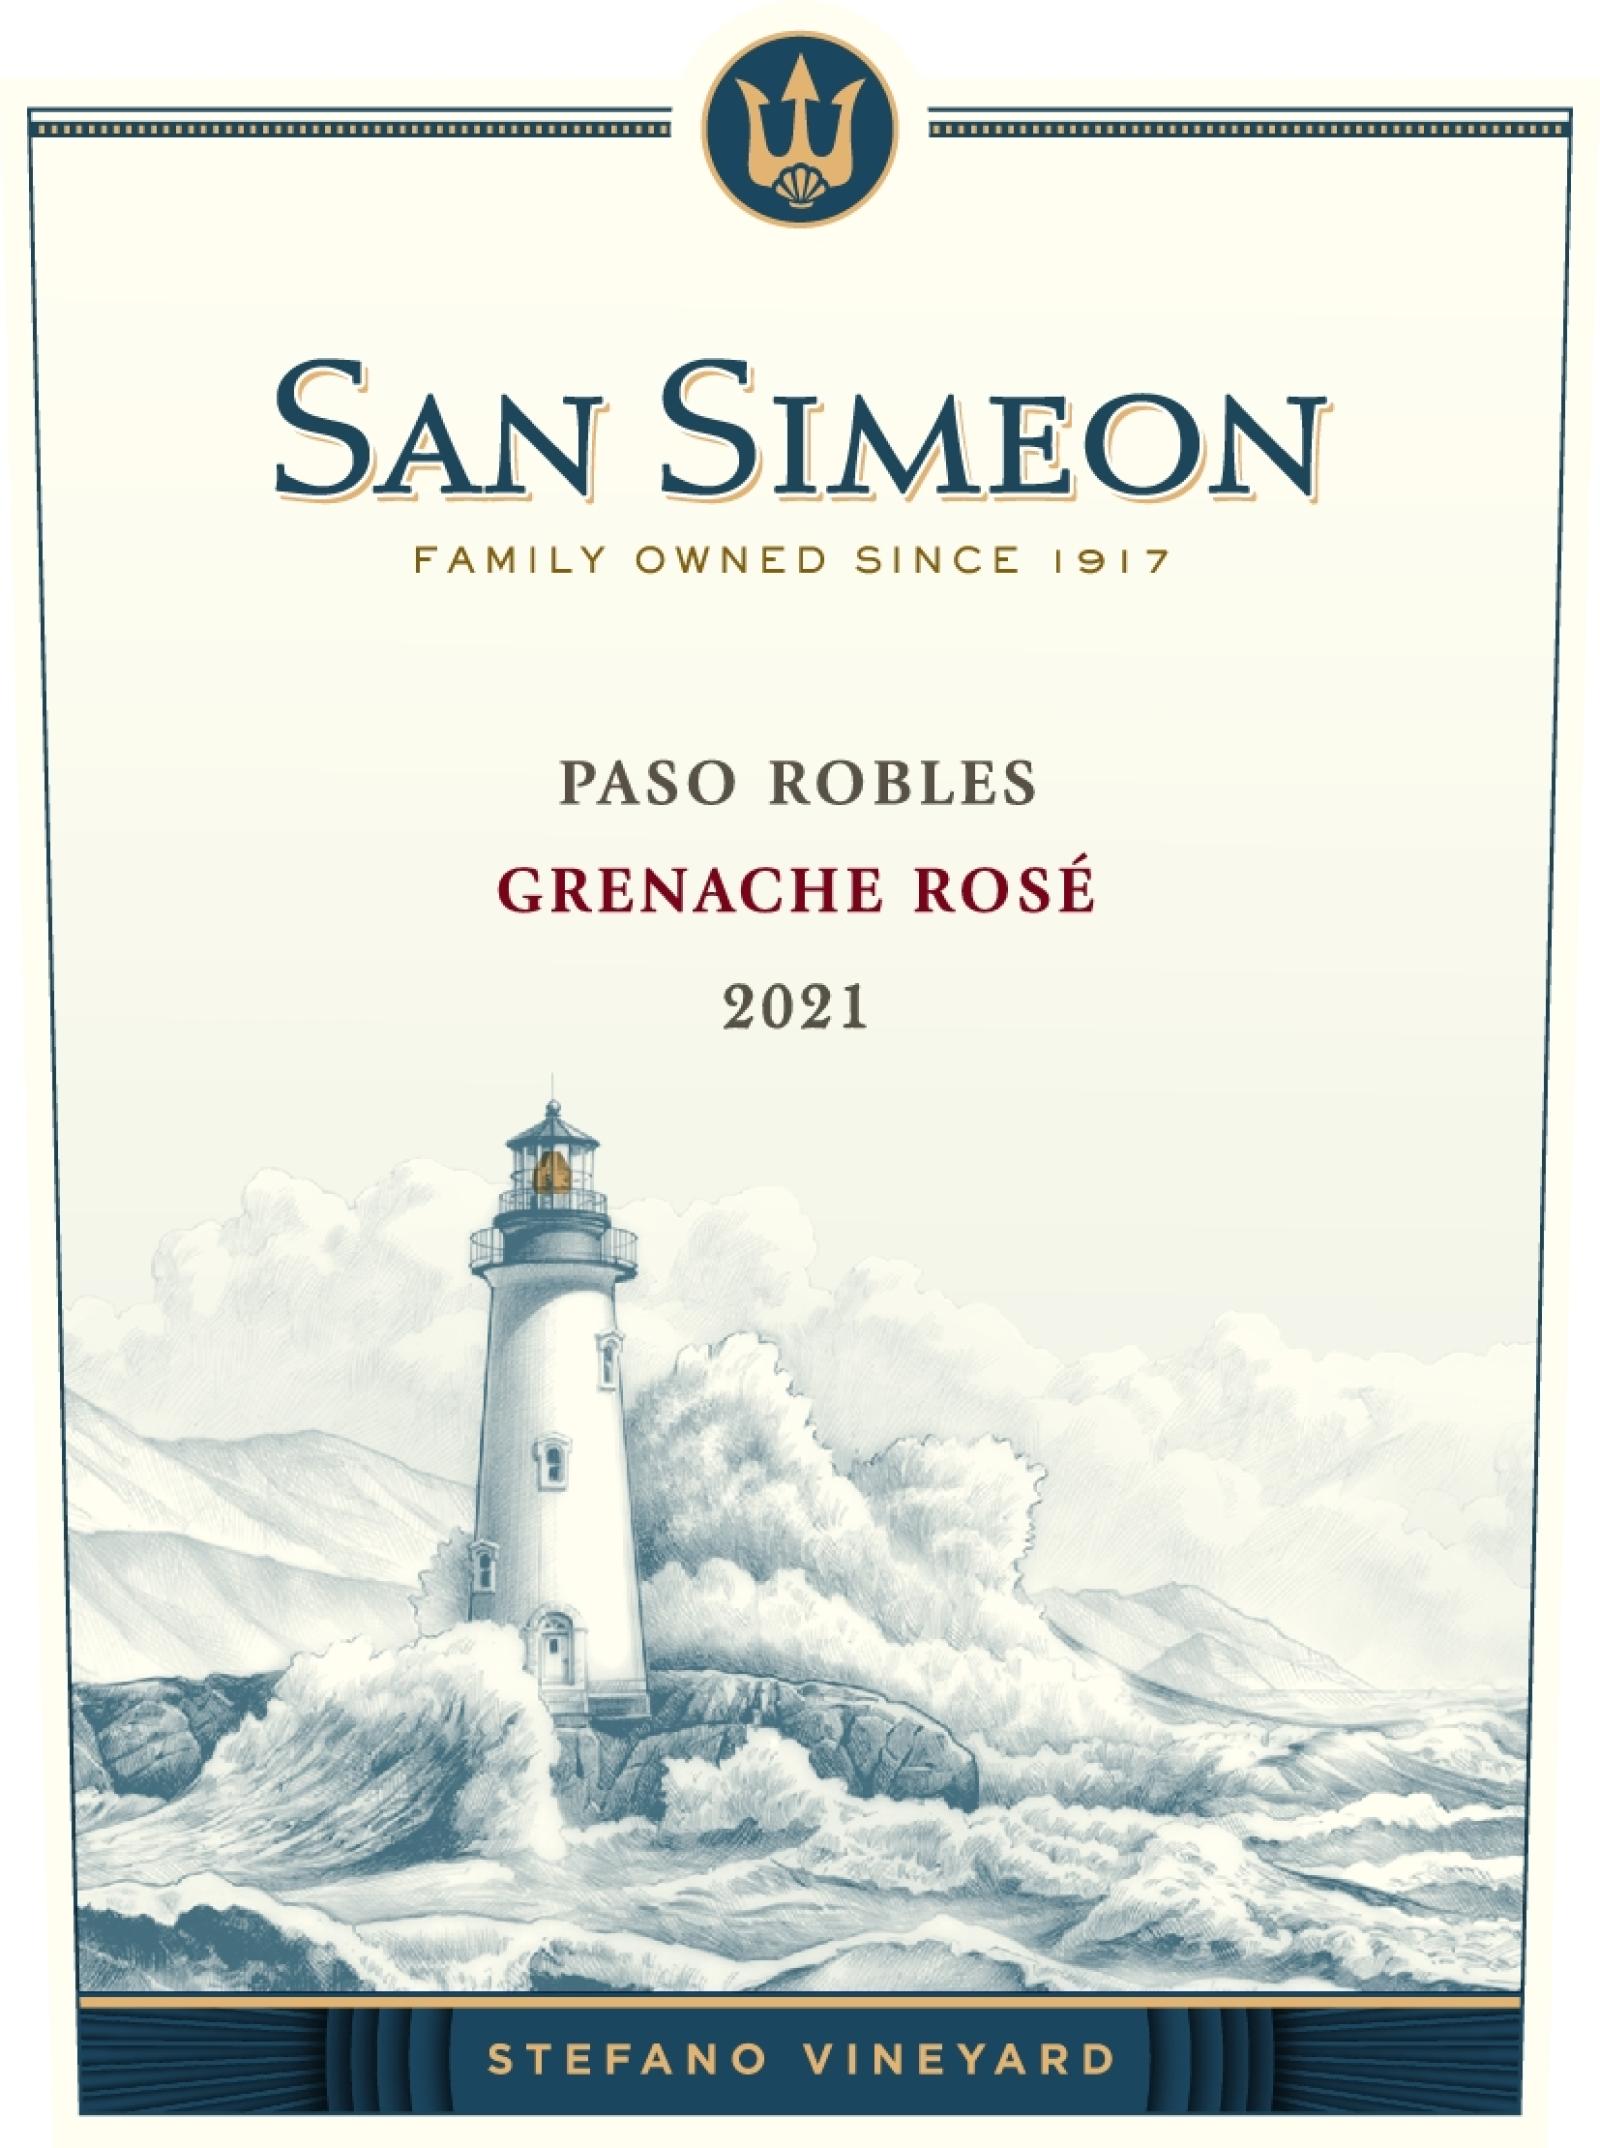 San Simeon Grenache Rose 2021